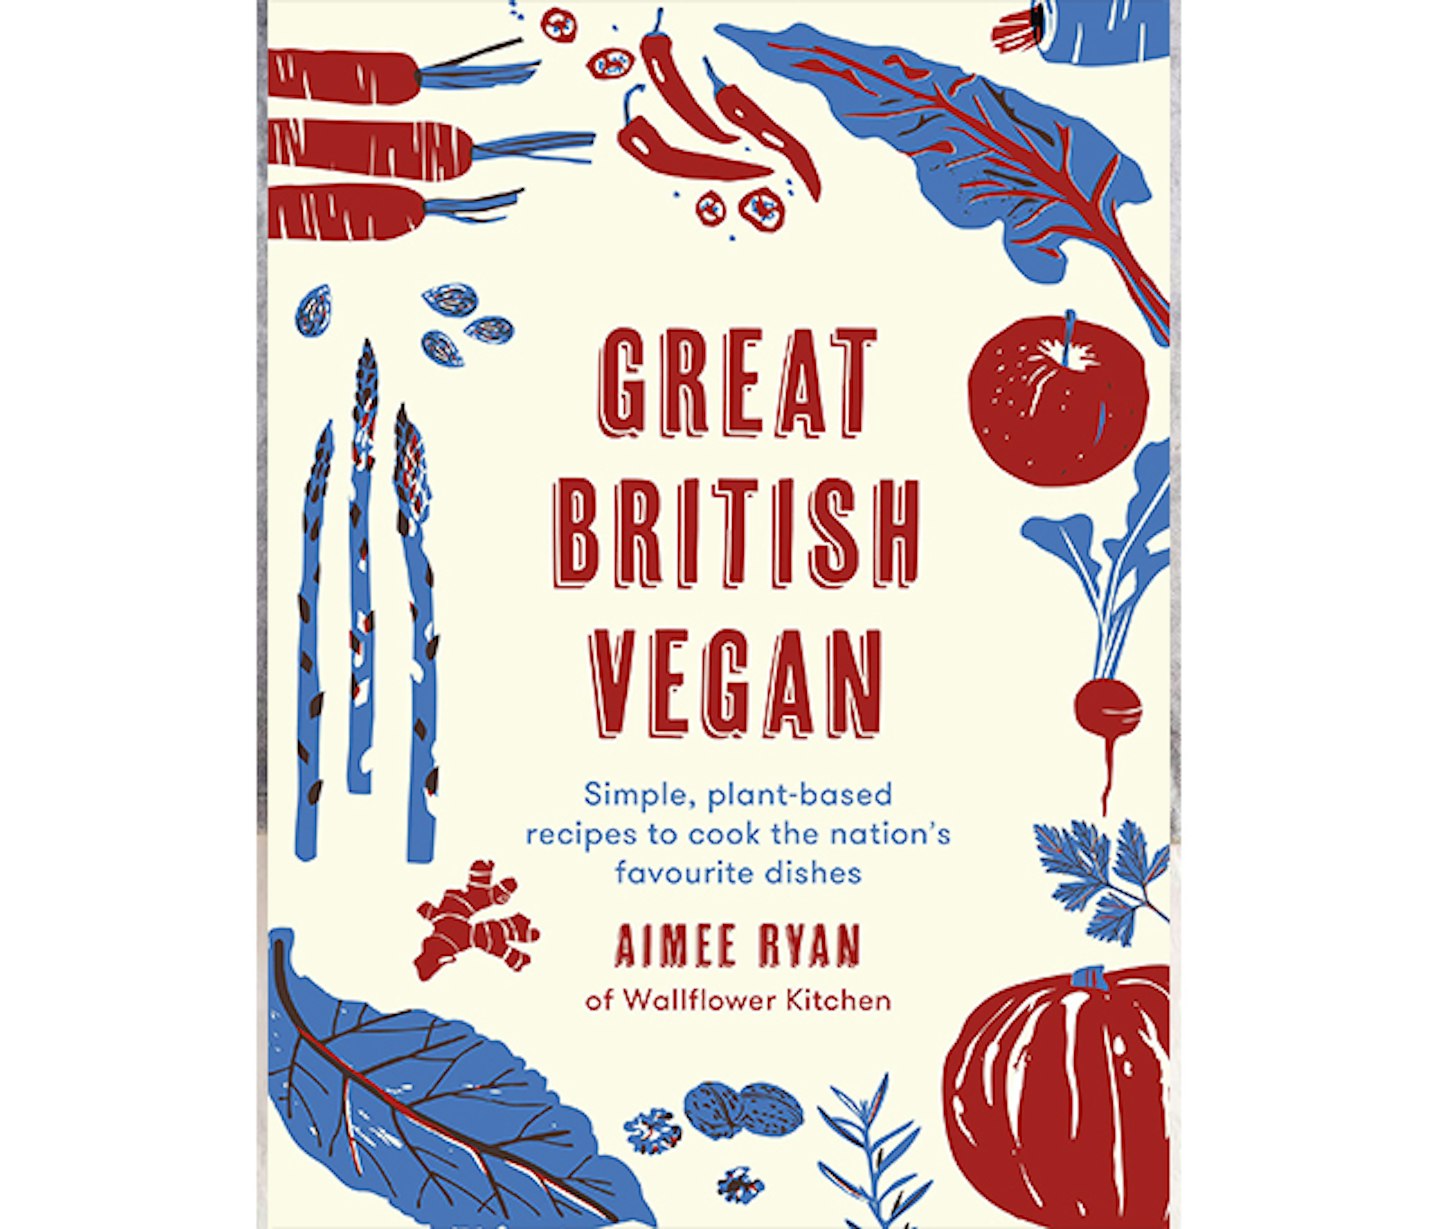 u2018Great British Veganu2019 by Aimee Ryan